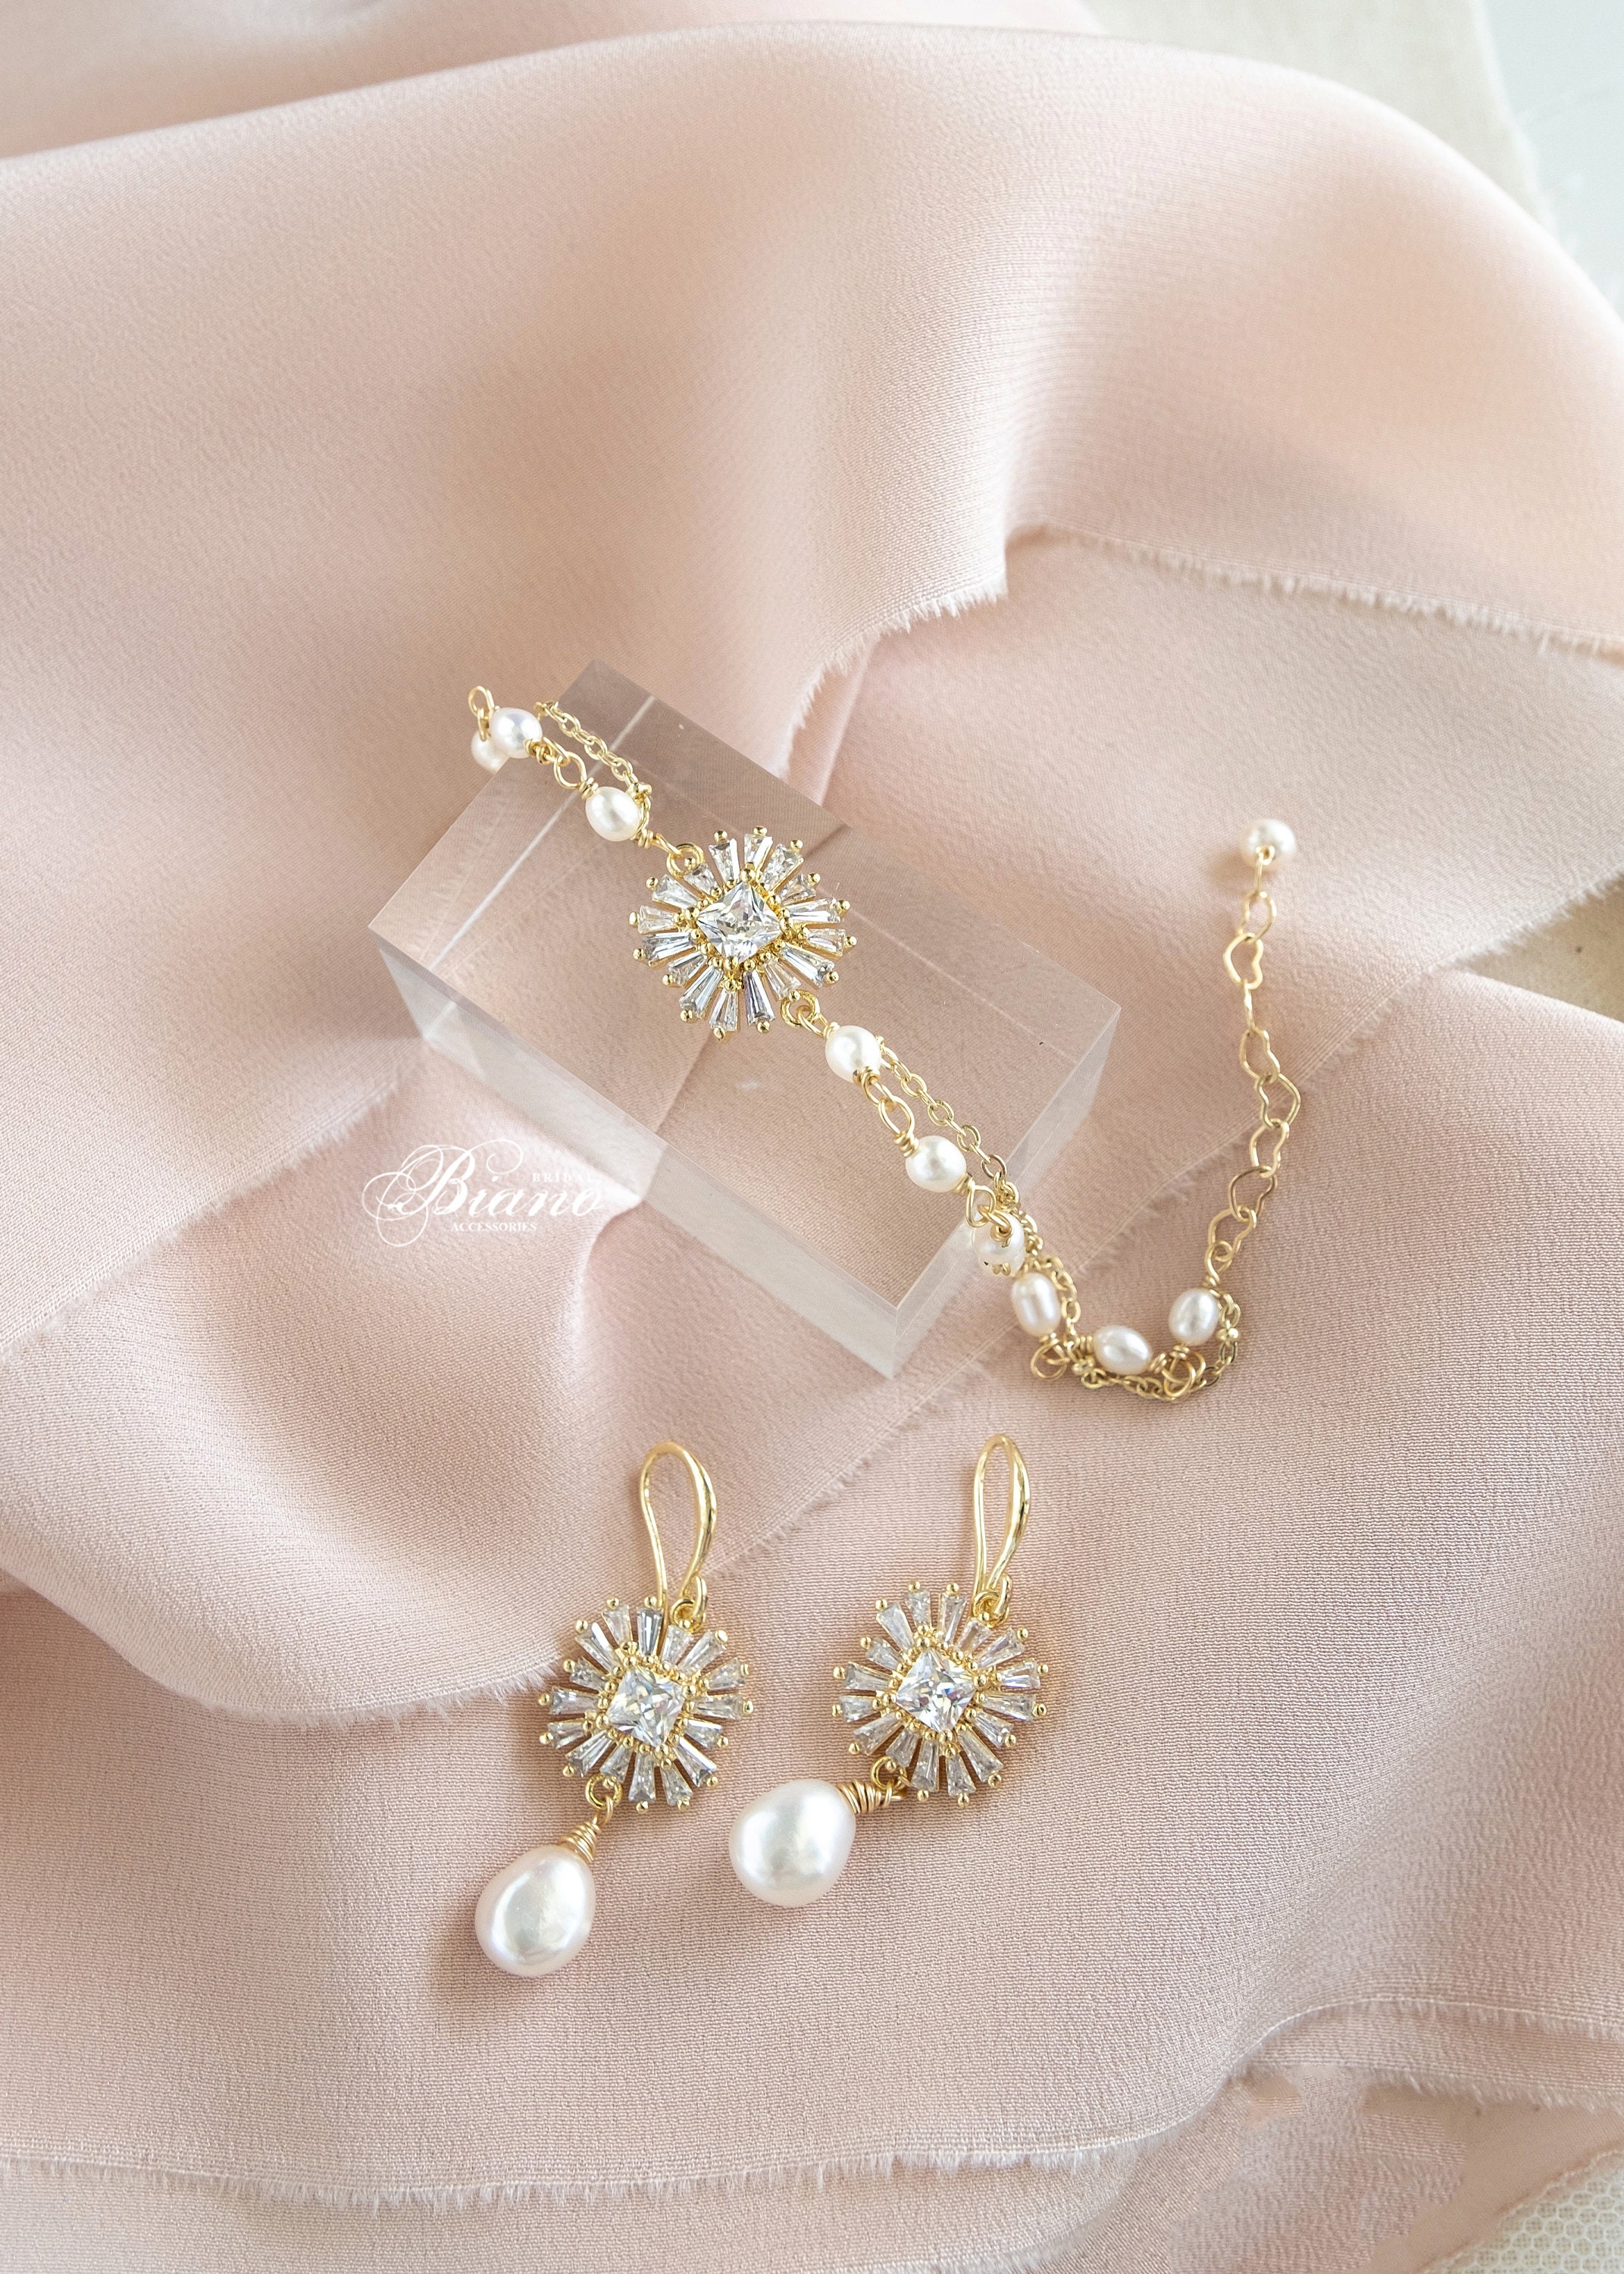 Bridal peal earrings Freshwater earrings Gold wedding earrings | Etsy